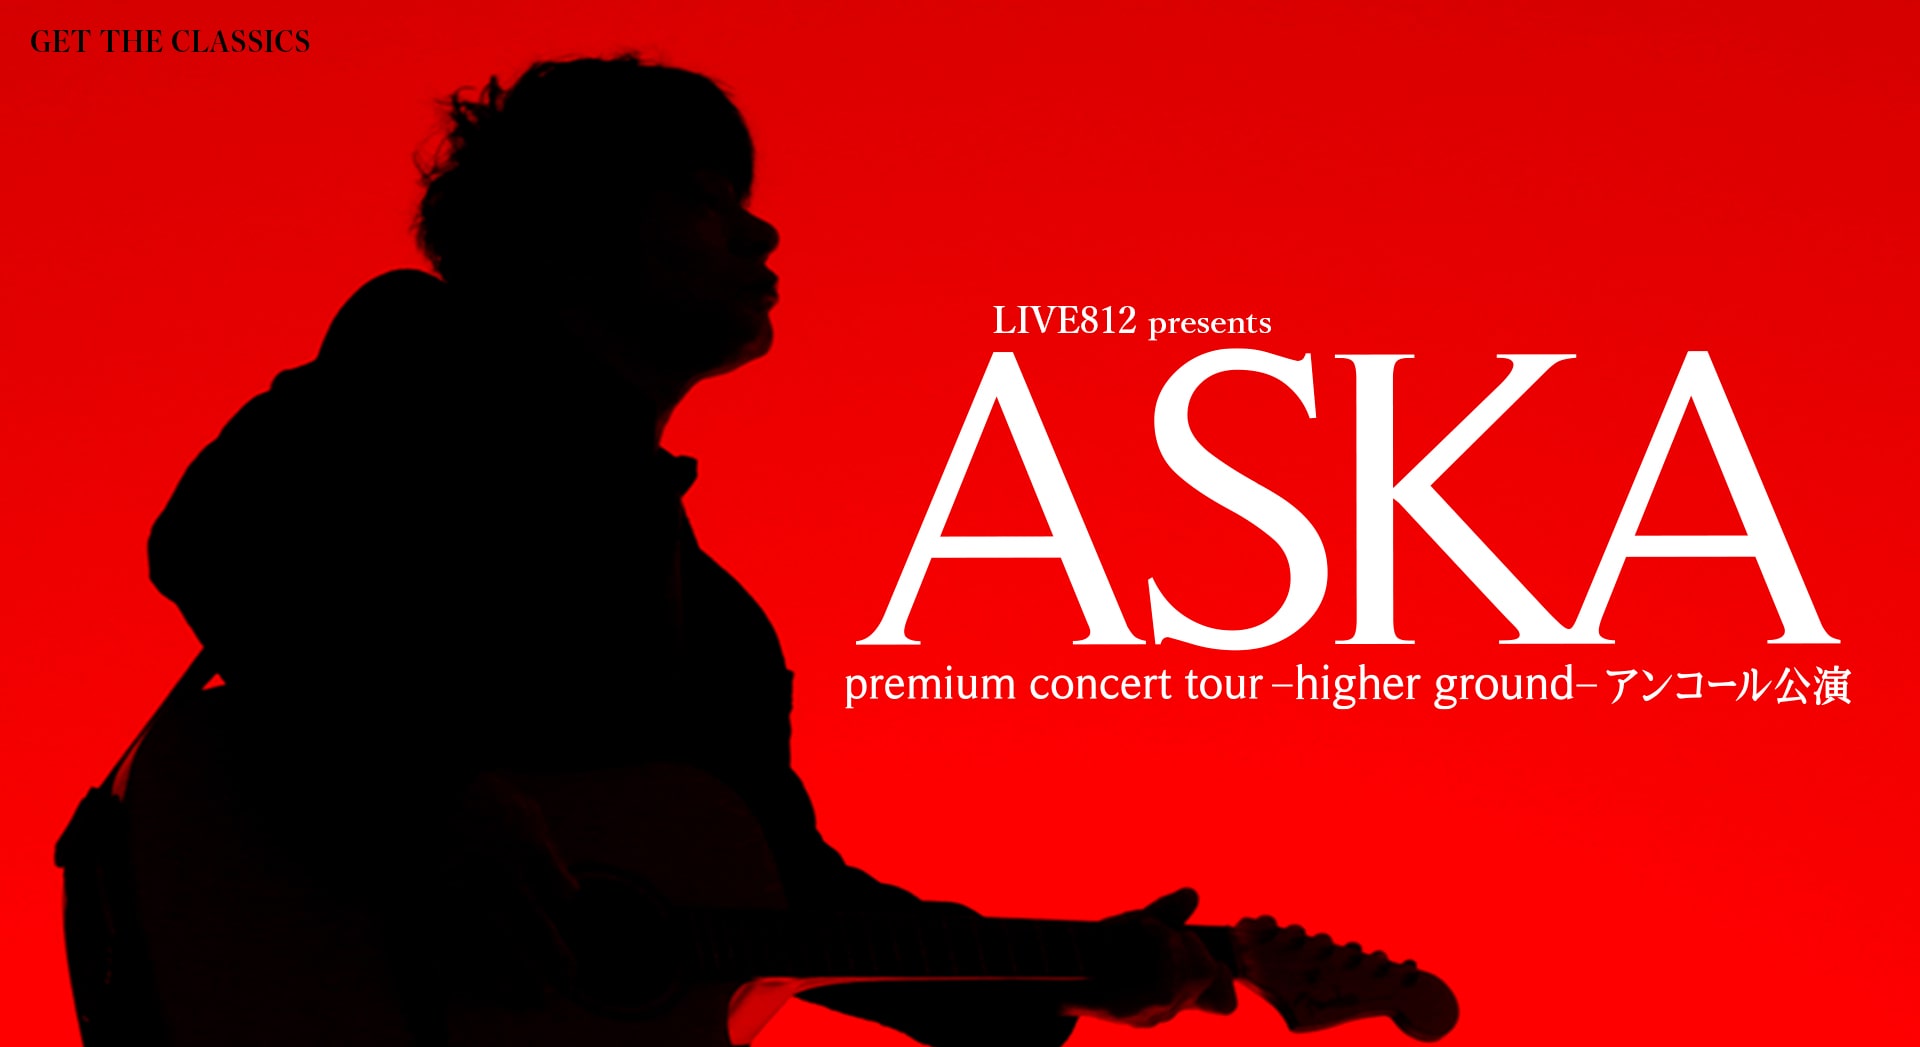 「ASKA premium concert tour-higher ground-アンコール公演」